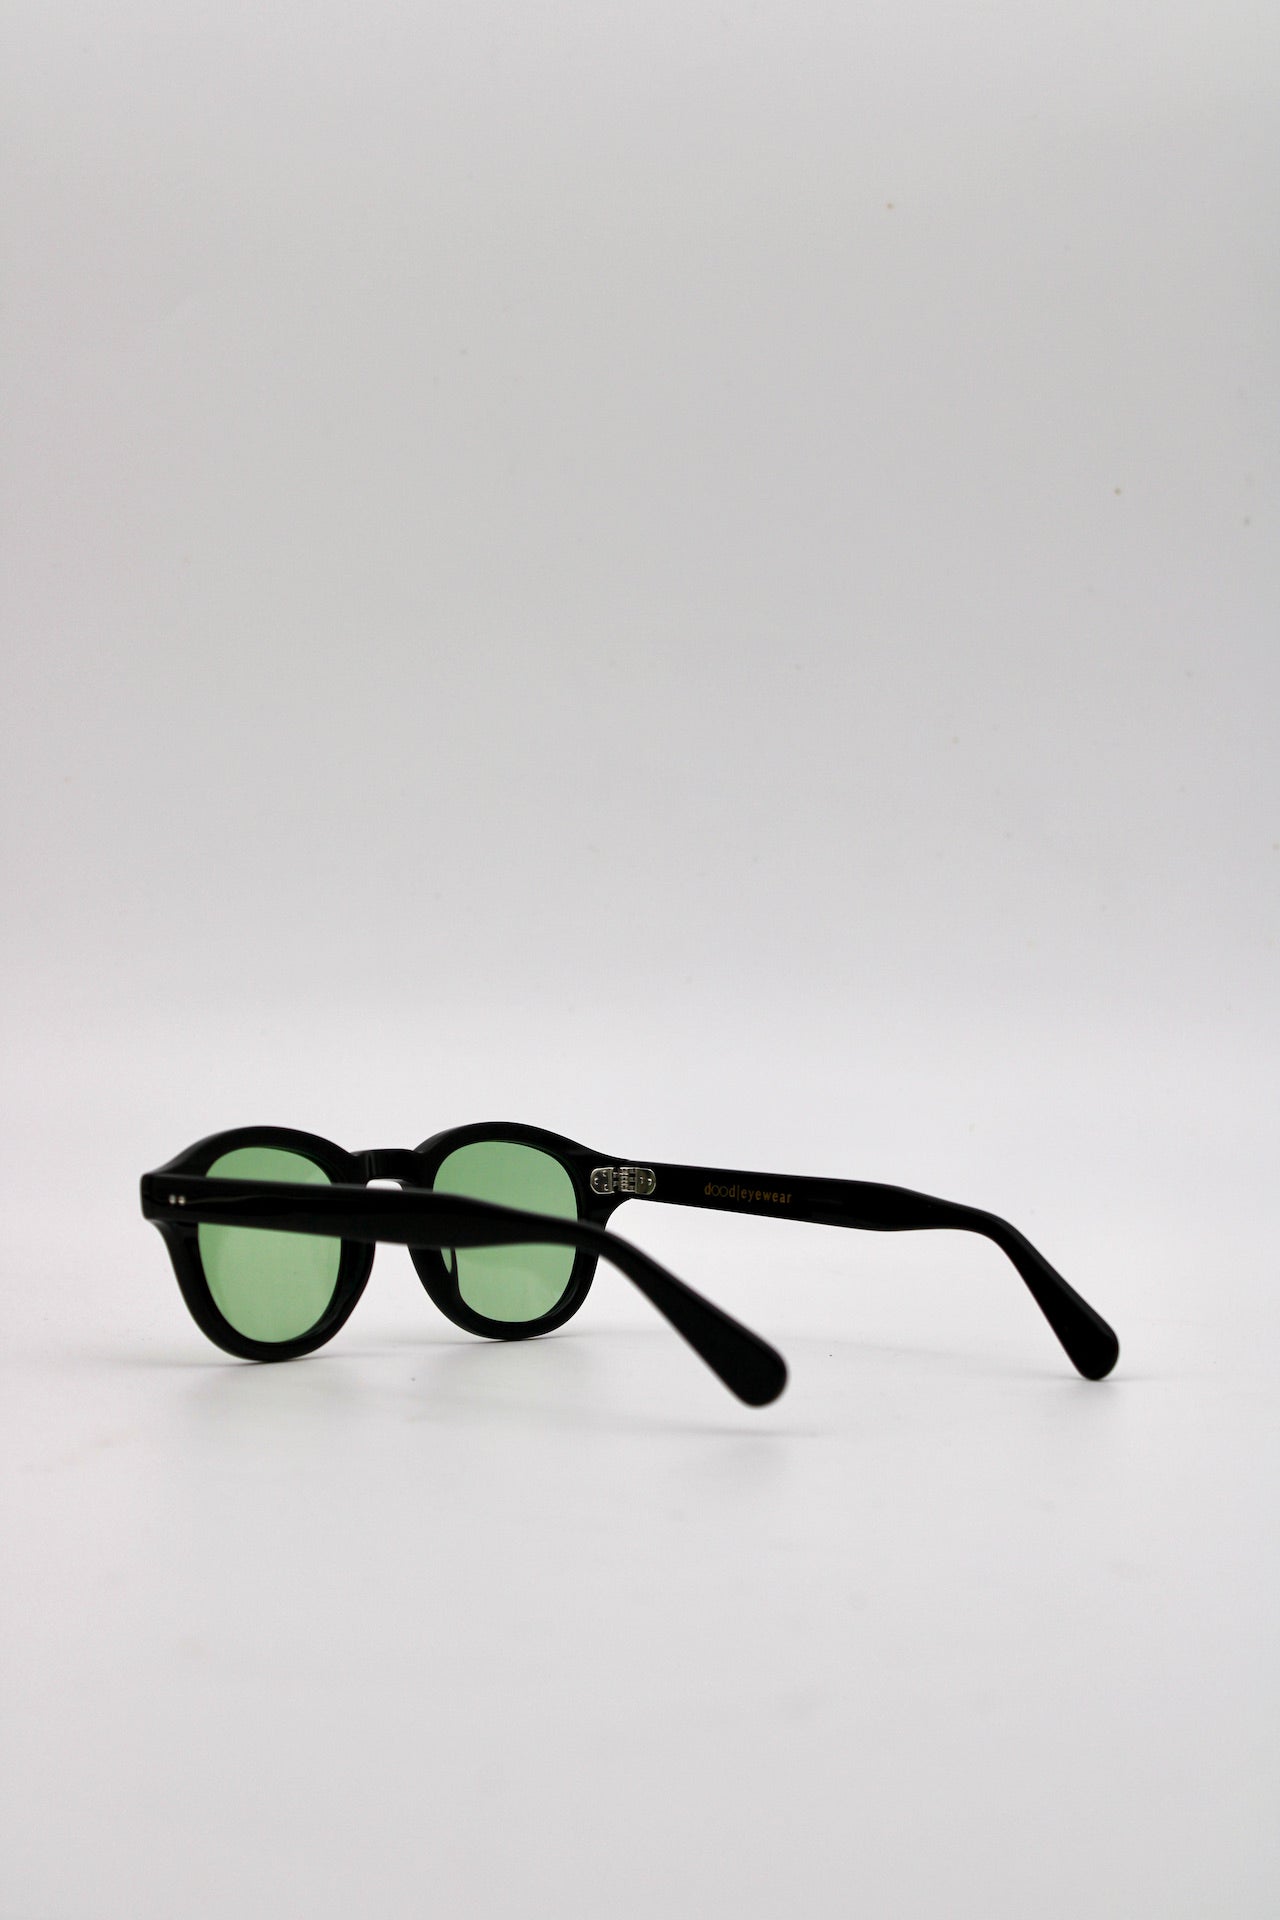 105 Originals Black Frame with Candy Apple Green Lenses